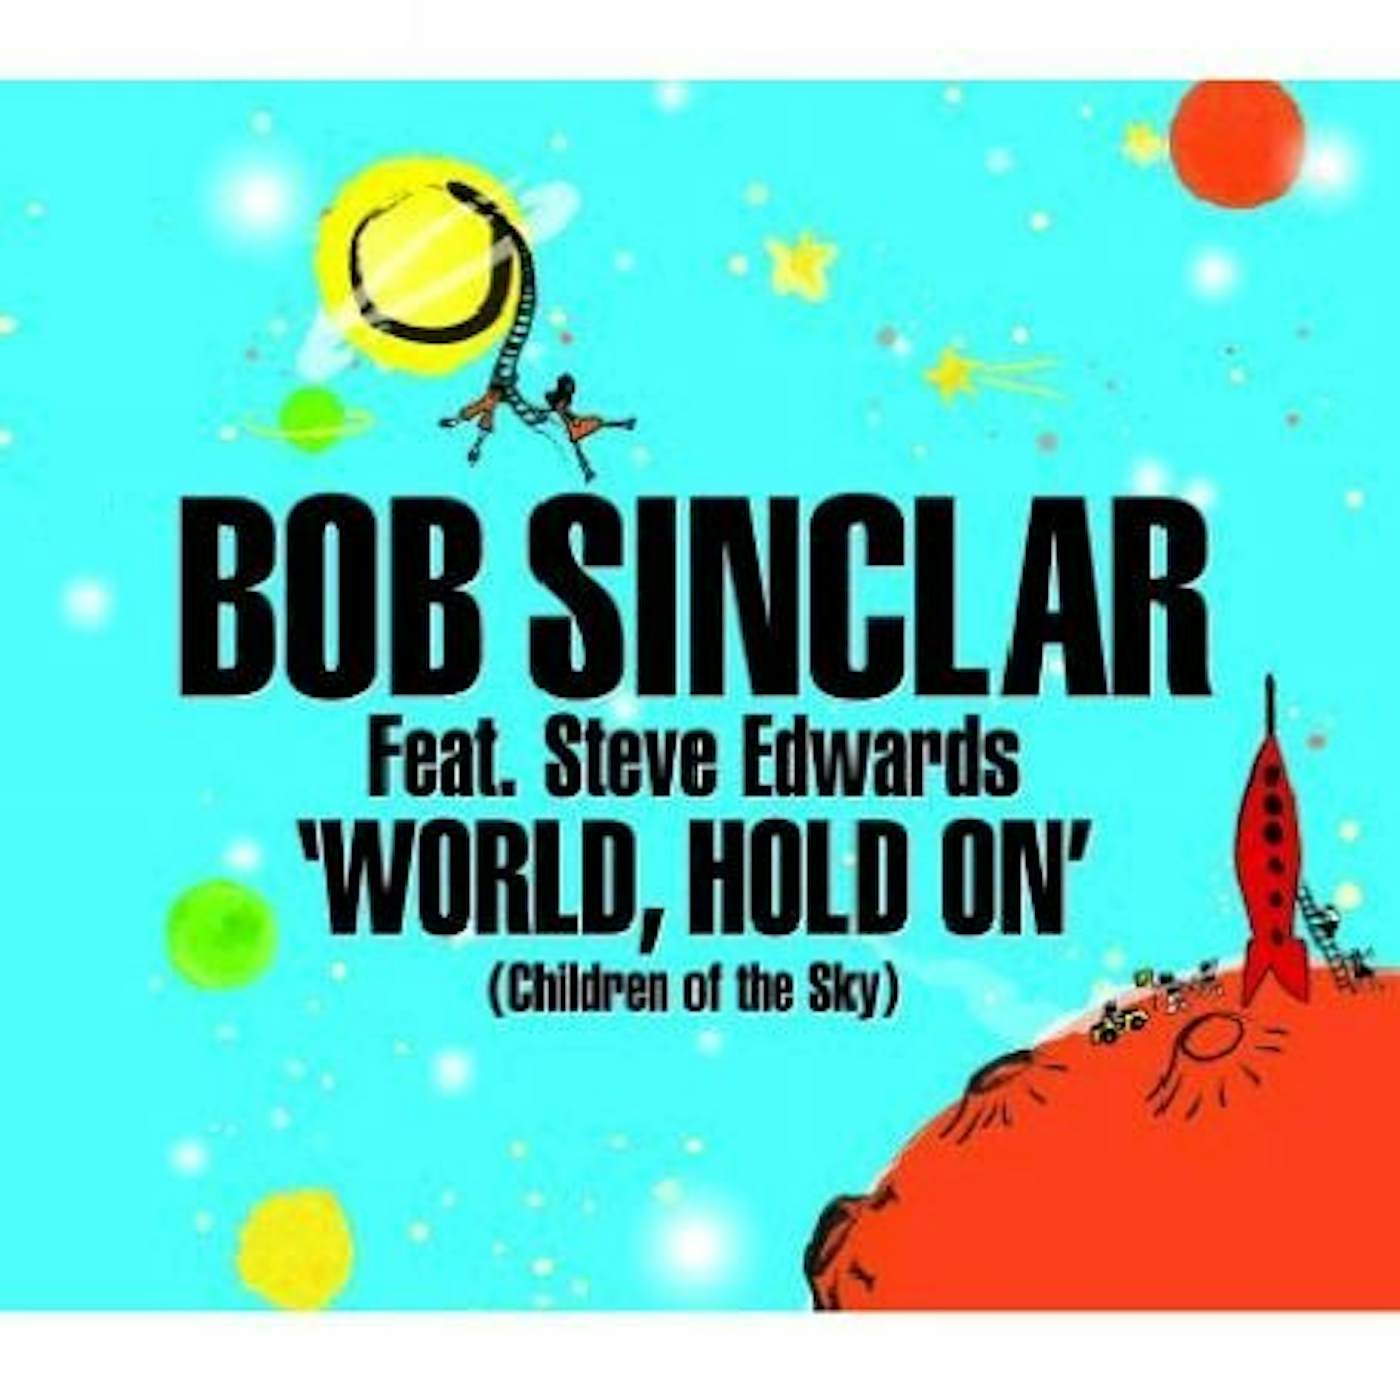 Bob Sinclar WORLD HOLD ON (CHILDREN OF THE SKY) Vinyl Record